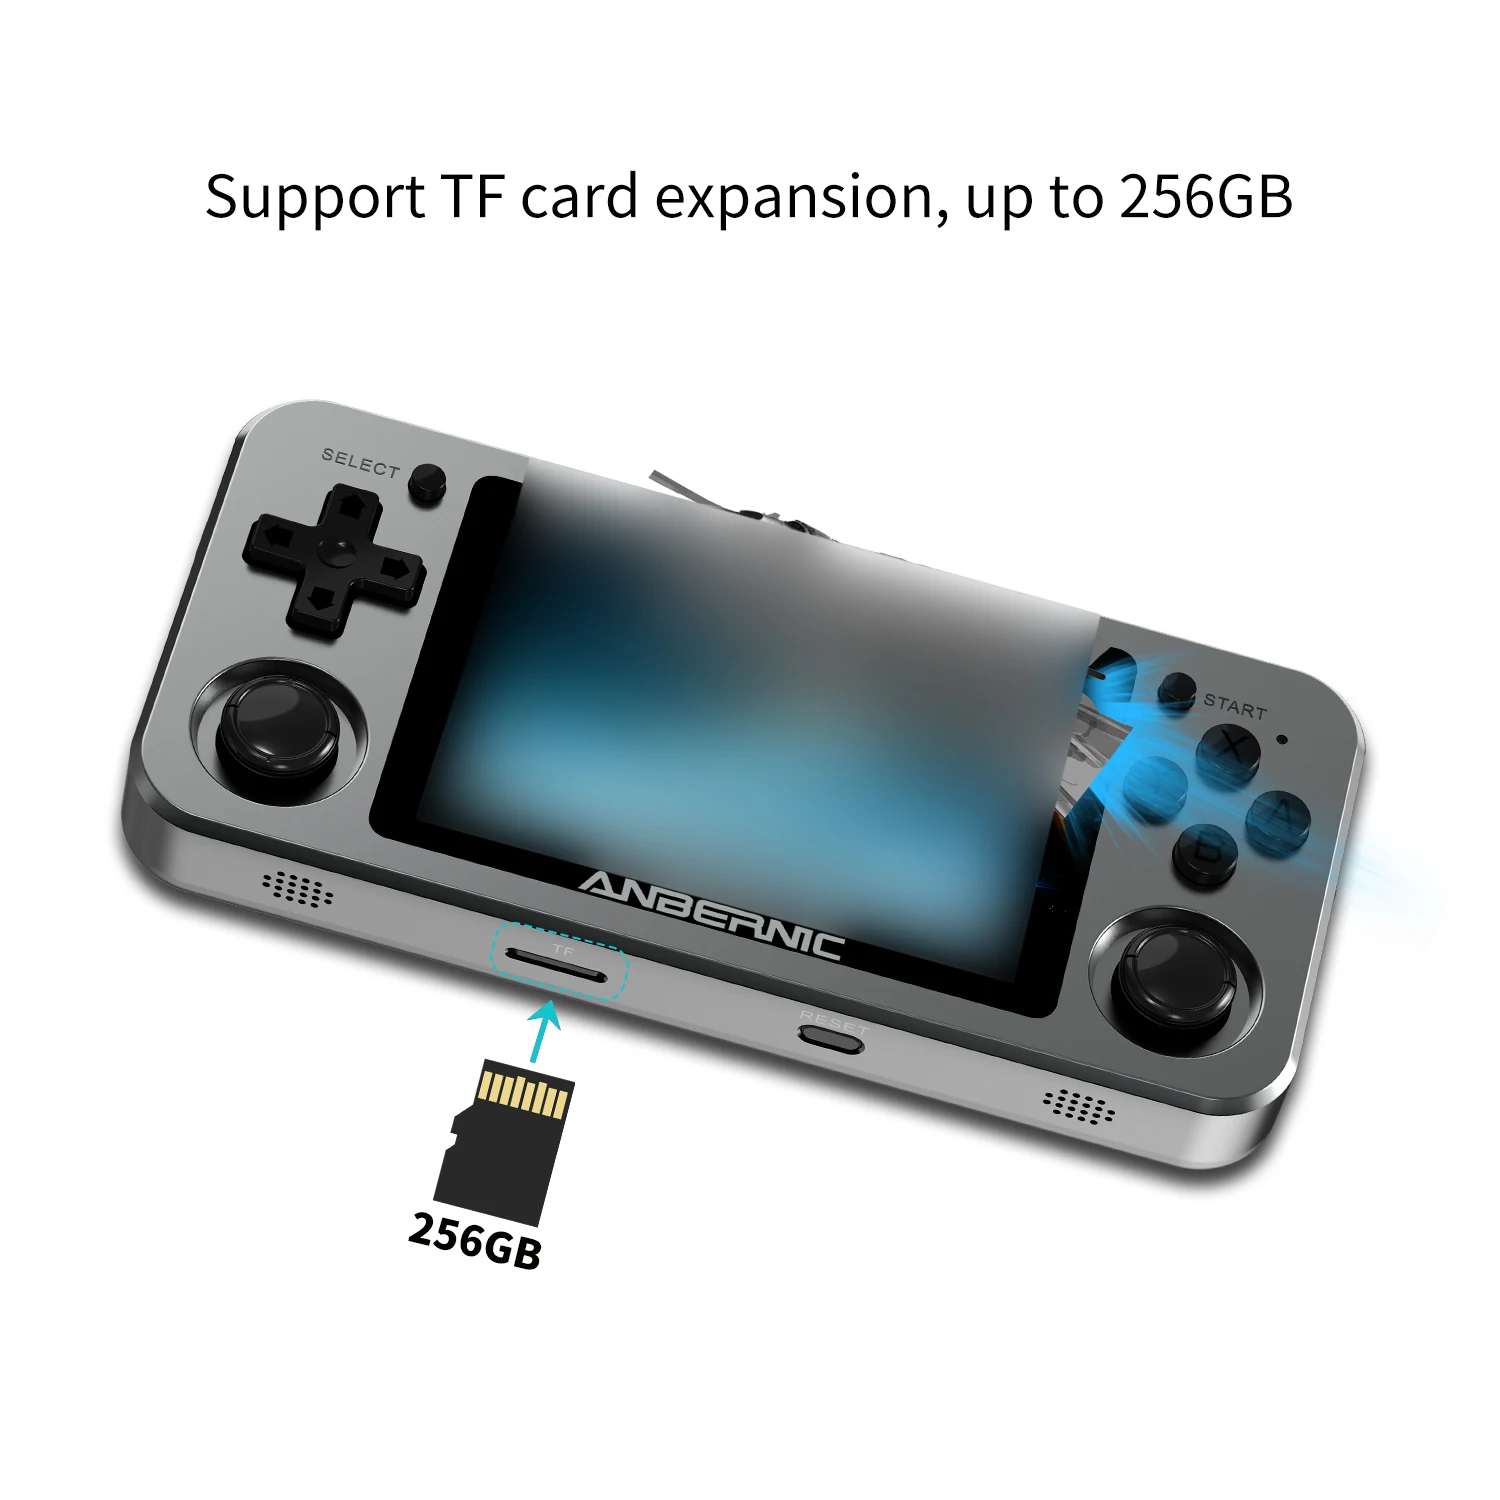 anbernic rg351m with 64gb card handheld| Alibaba.com